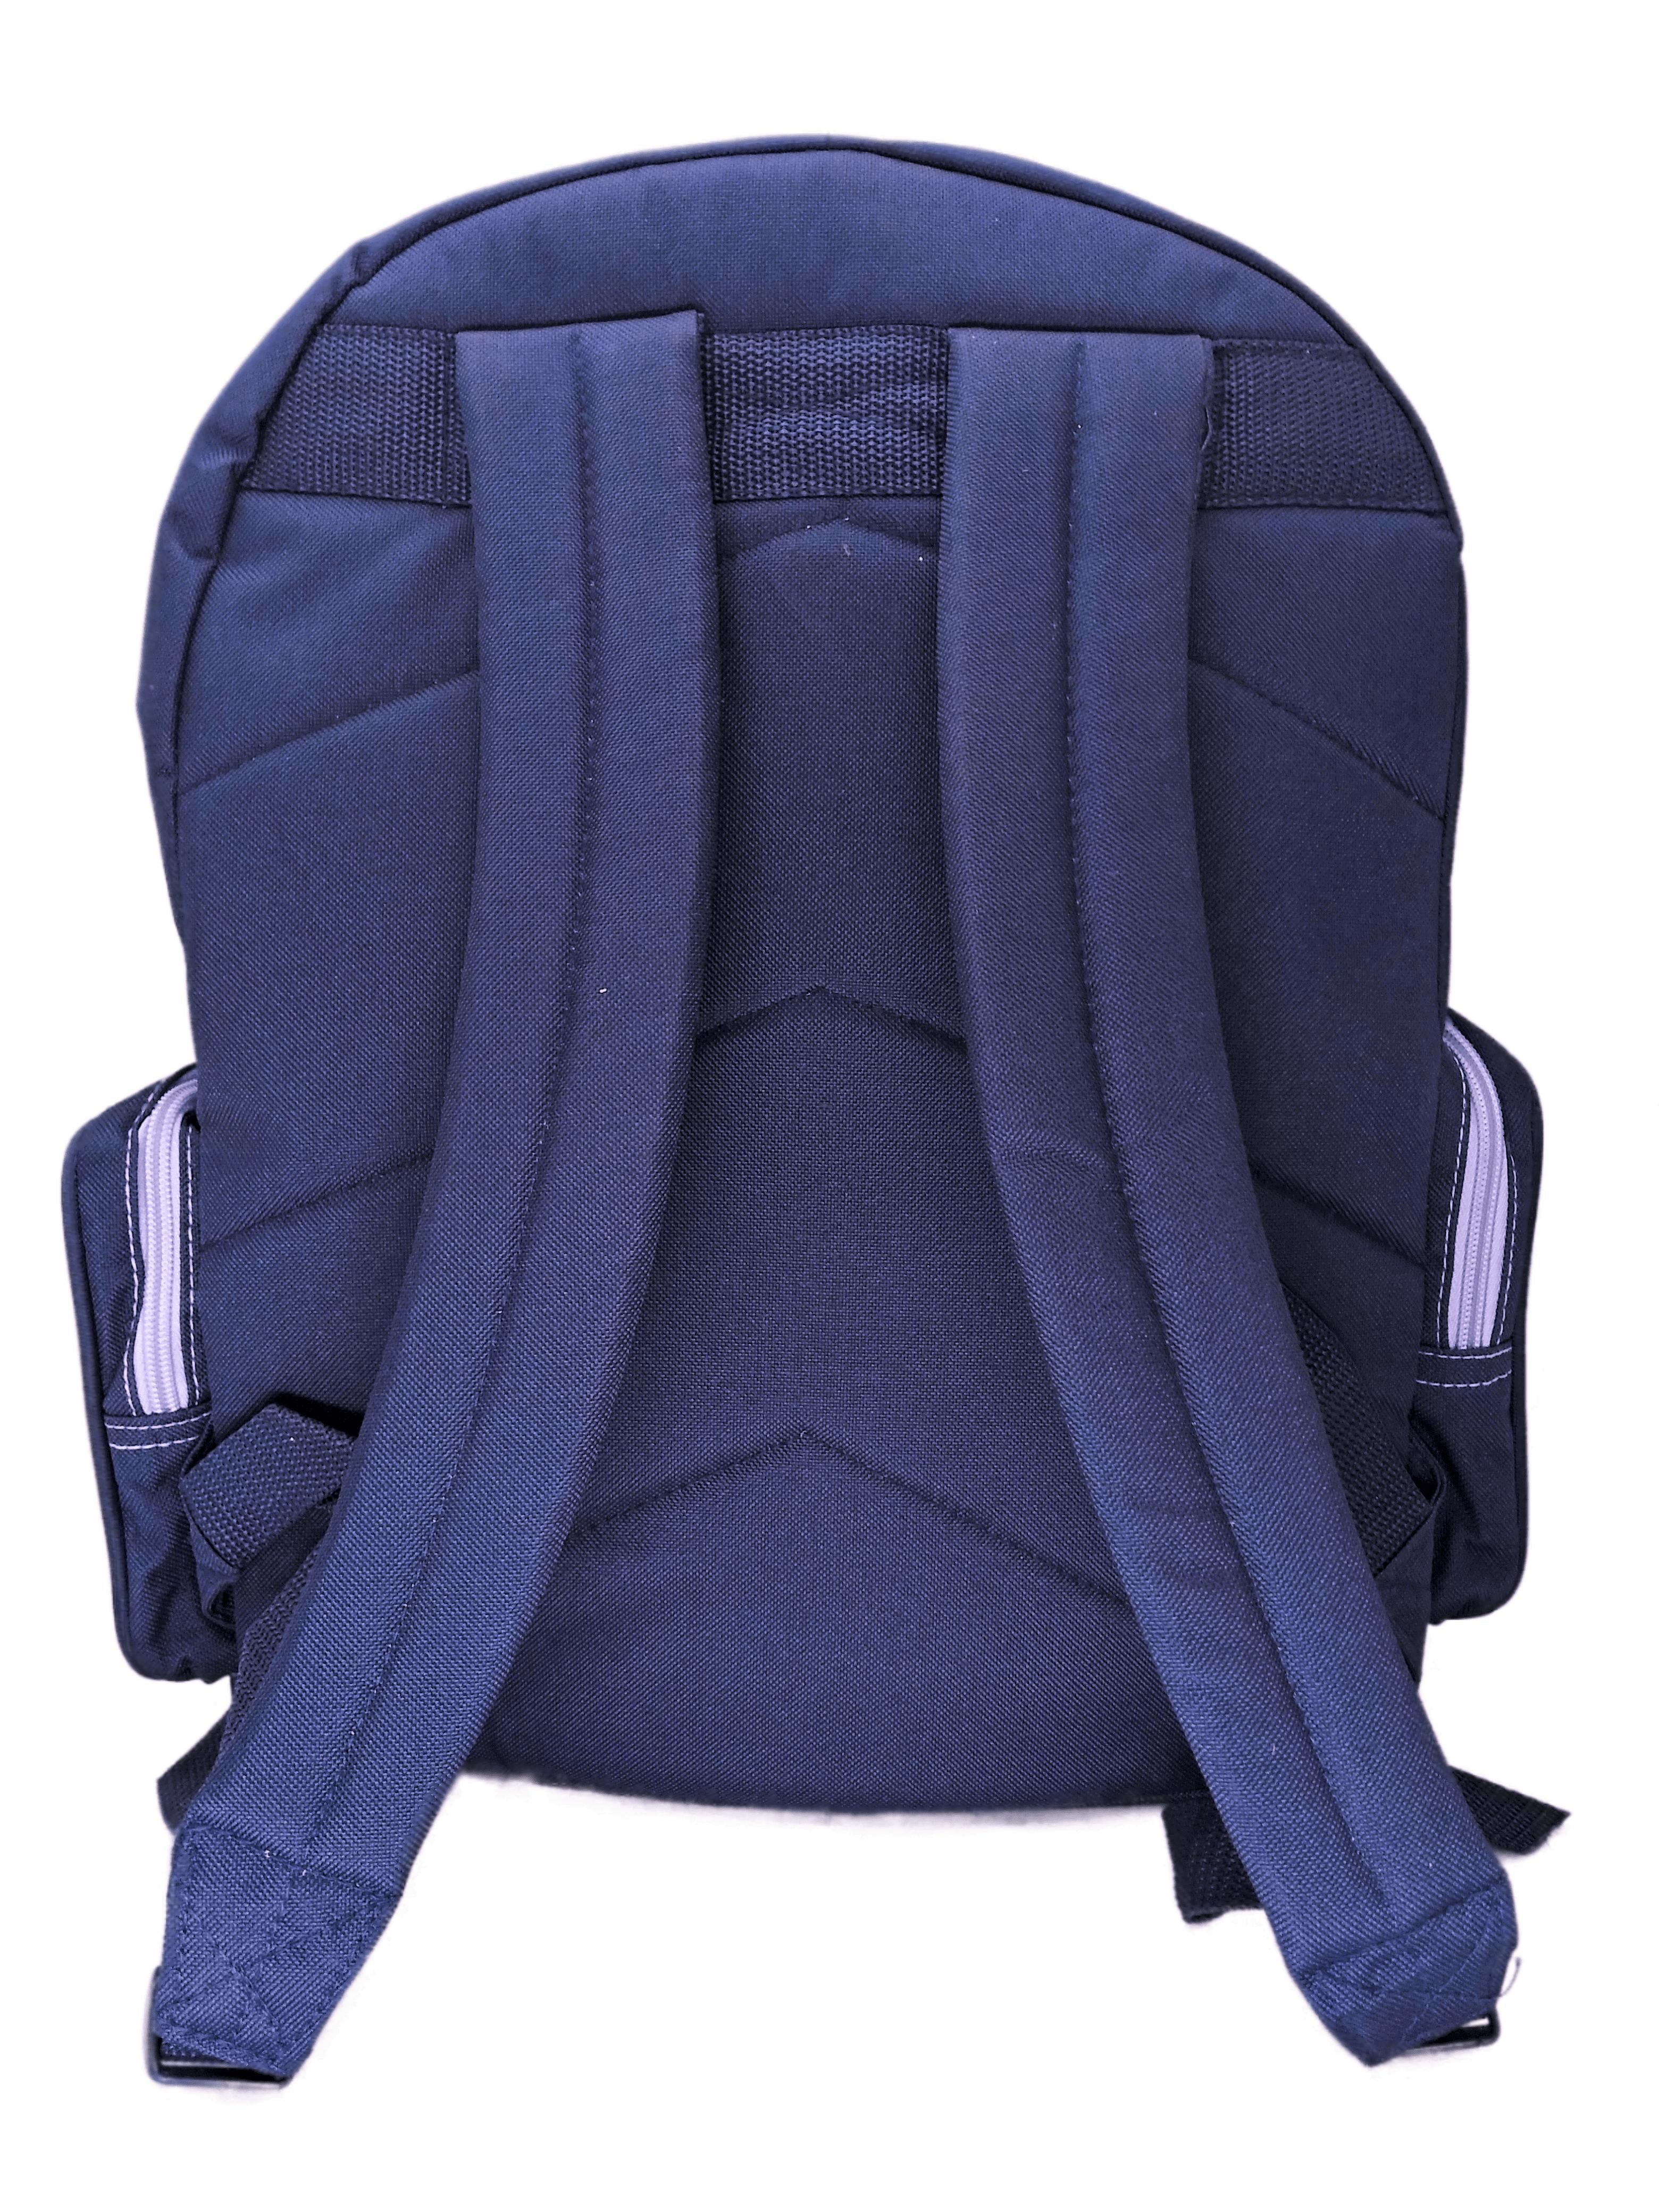 Original Bratz purple logo  Backpack for Sale by Redbubblofficia